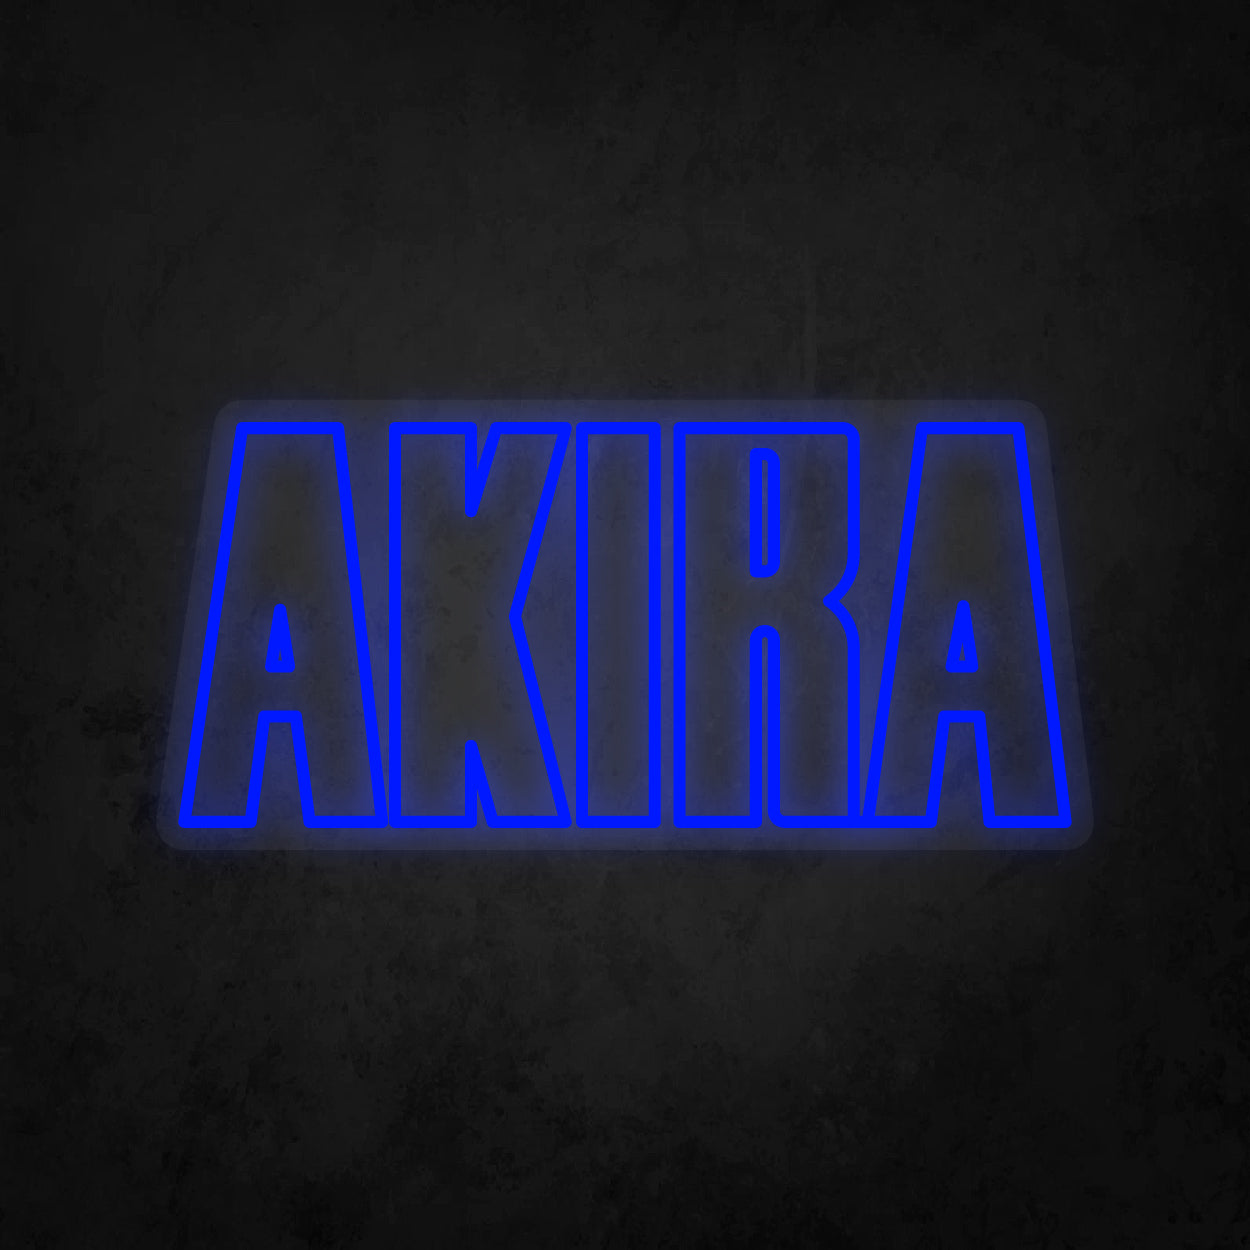 LED Neon Sign - AKIRA